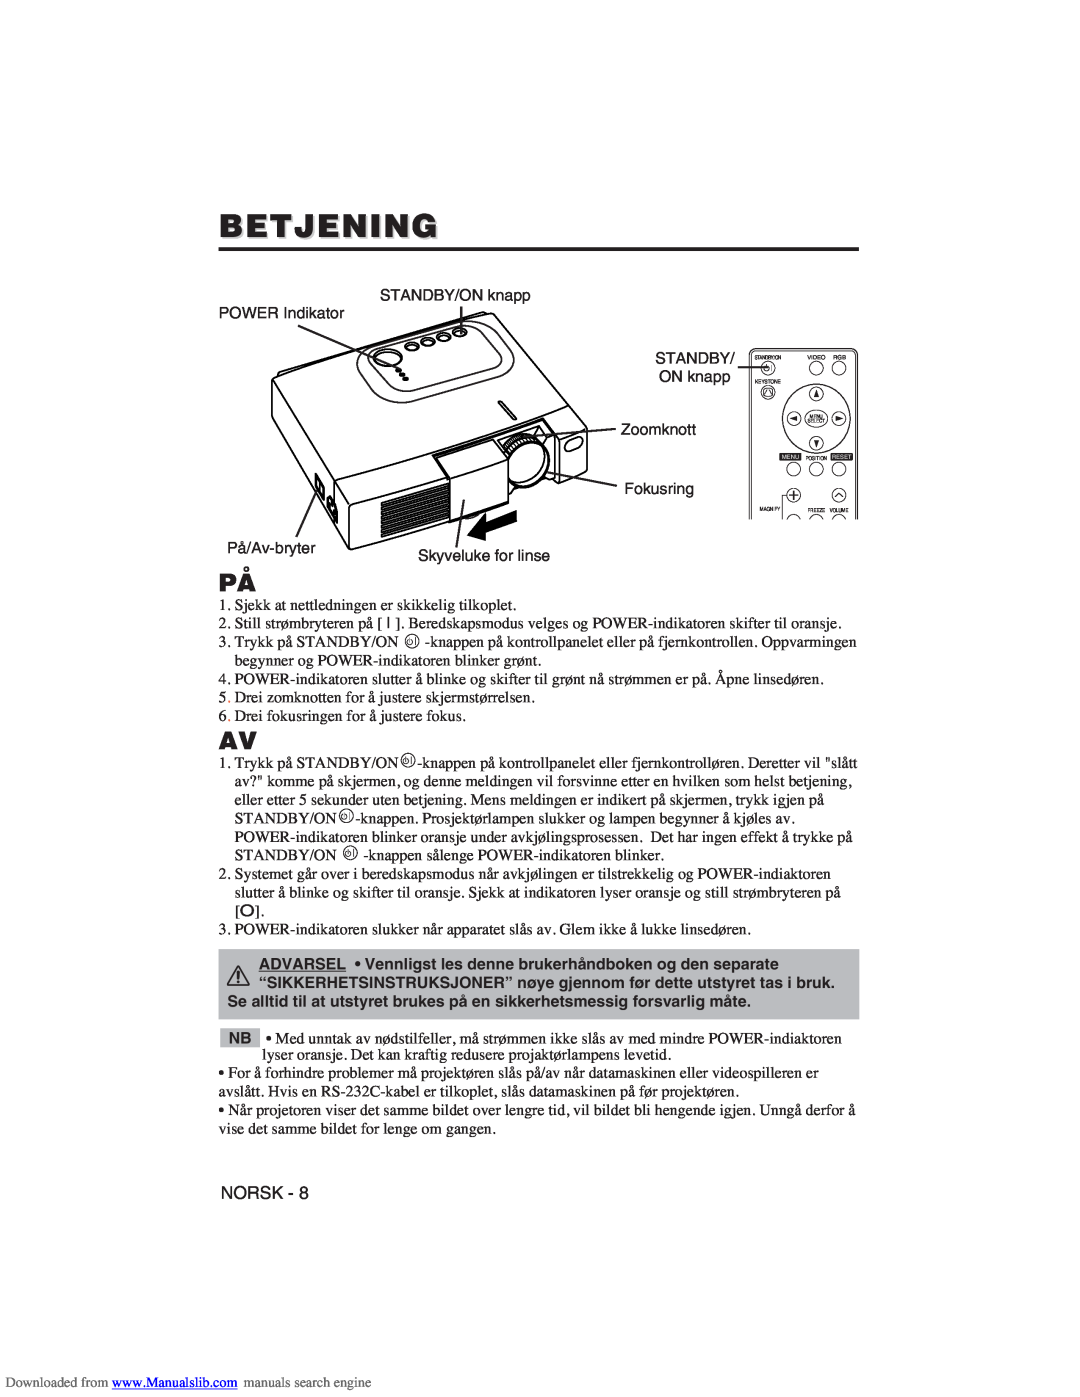 Hitachi CP-X275W user manual Betjening 